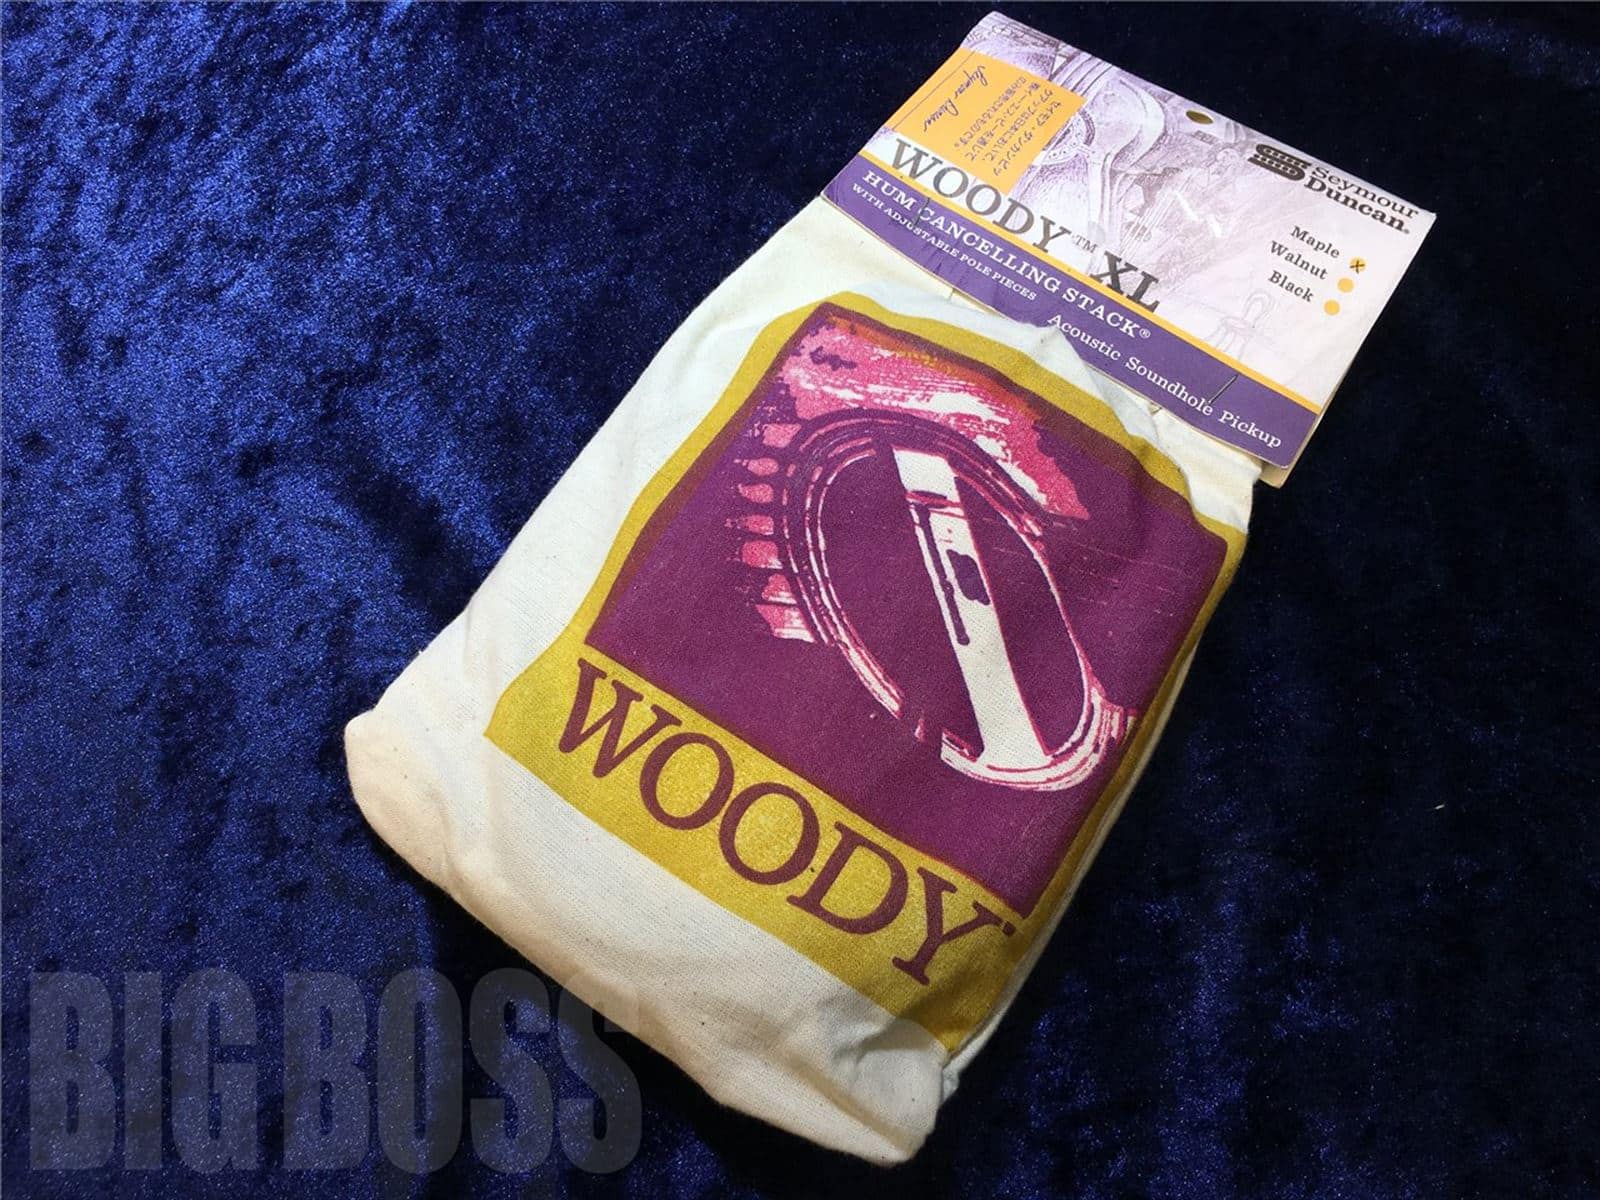 Seymour Duncan(セイモアダンカン) Woody XL [SA-3XL] (アコースティックギター用ピックアップ)